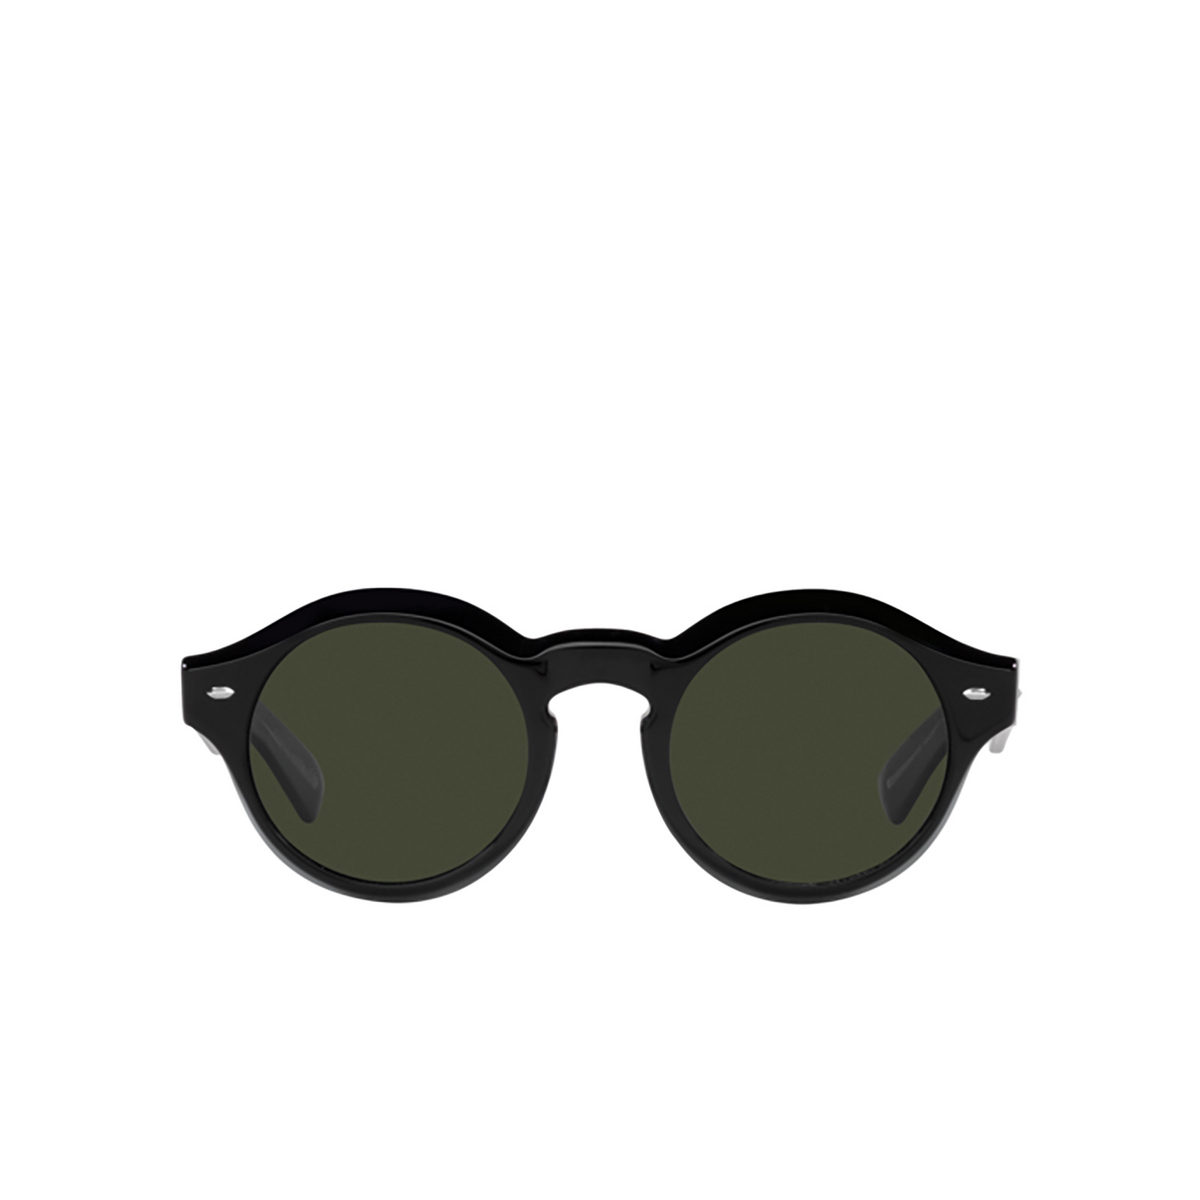 Oliver Peoples CASSAVET Sunglasses 1492P1 Black - front view